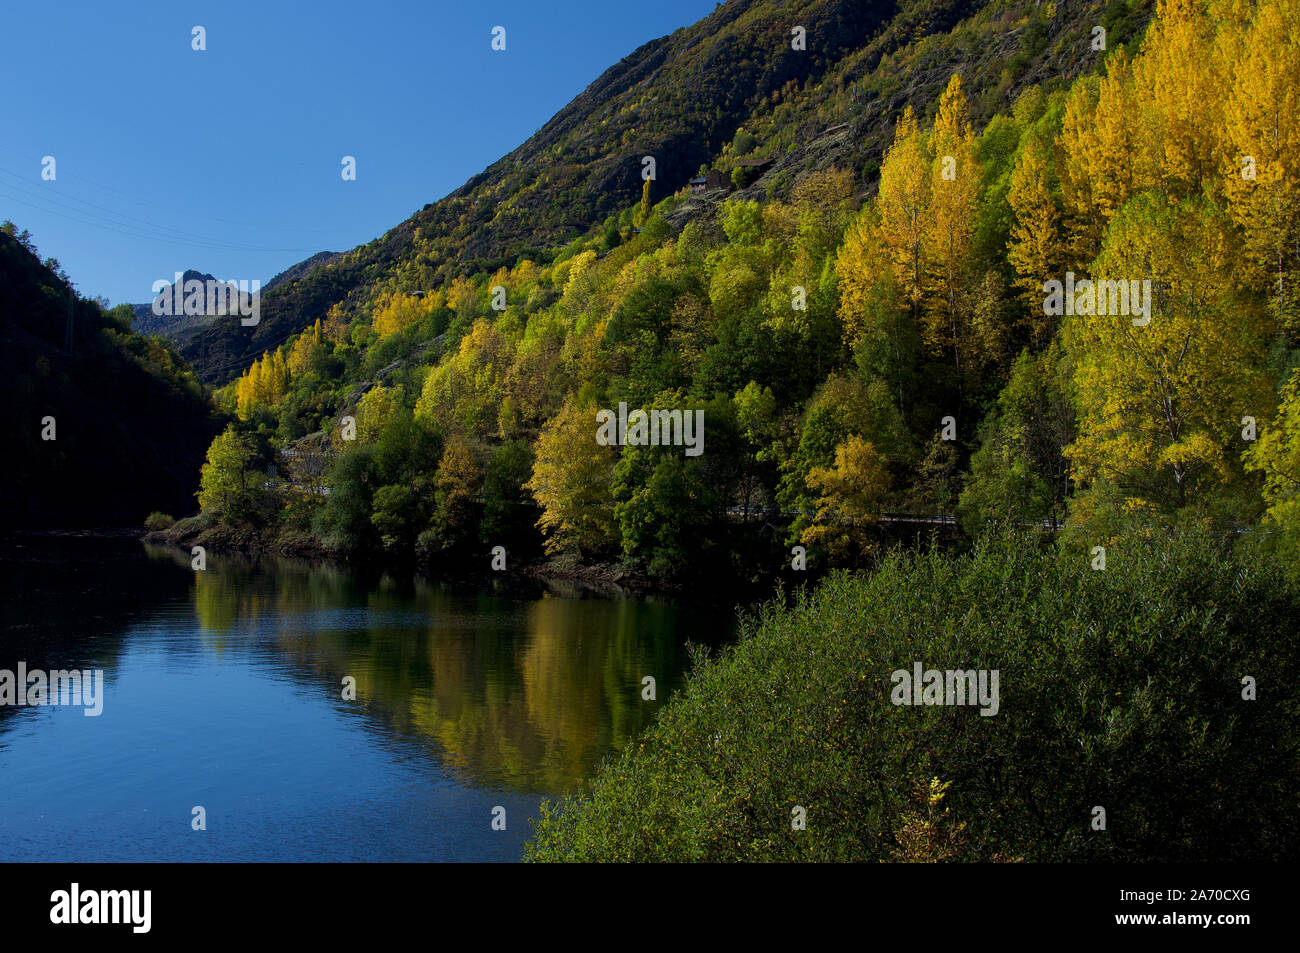 Herbstfarben in Catalunya Comarca Pallars Sobira Stockfoto